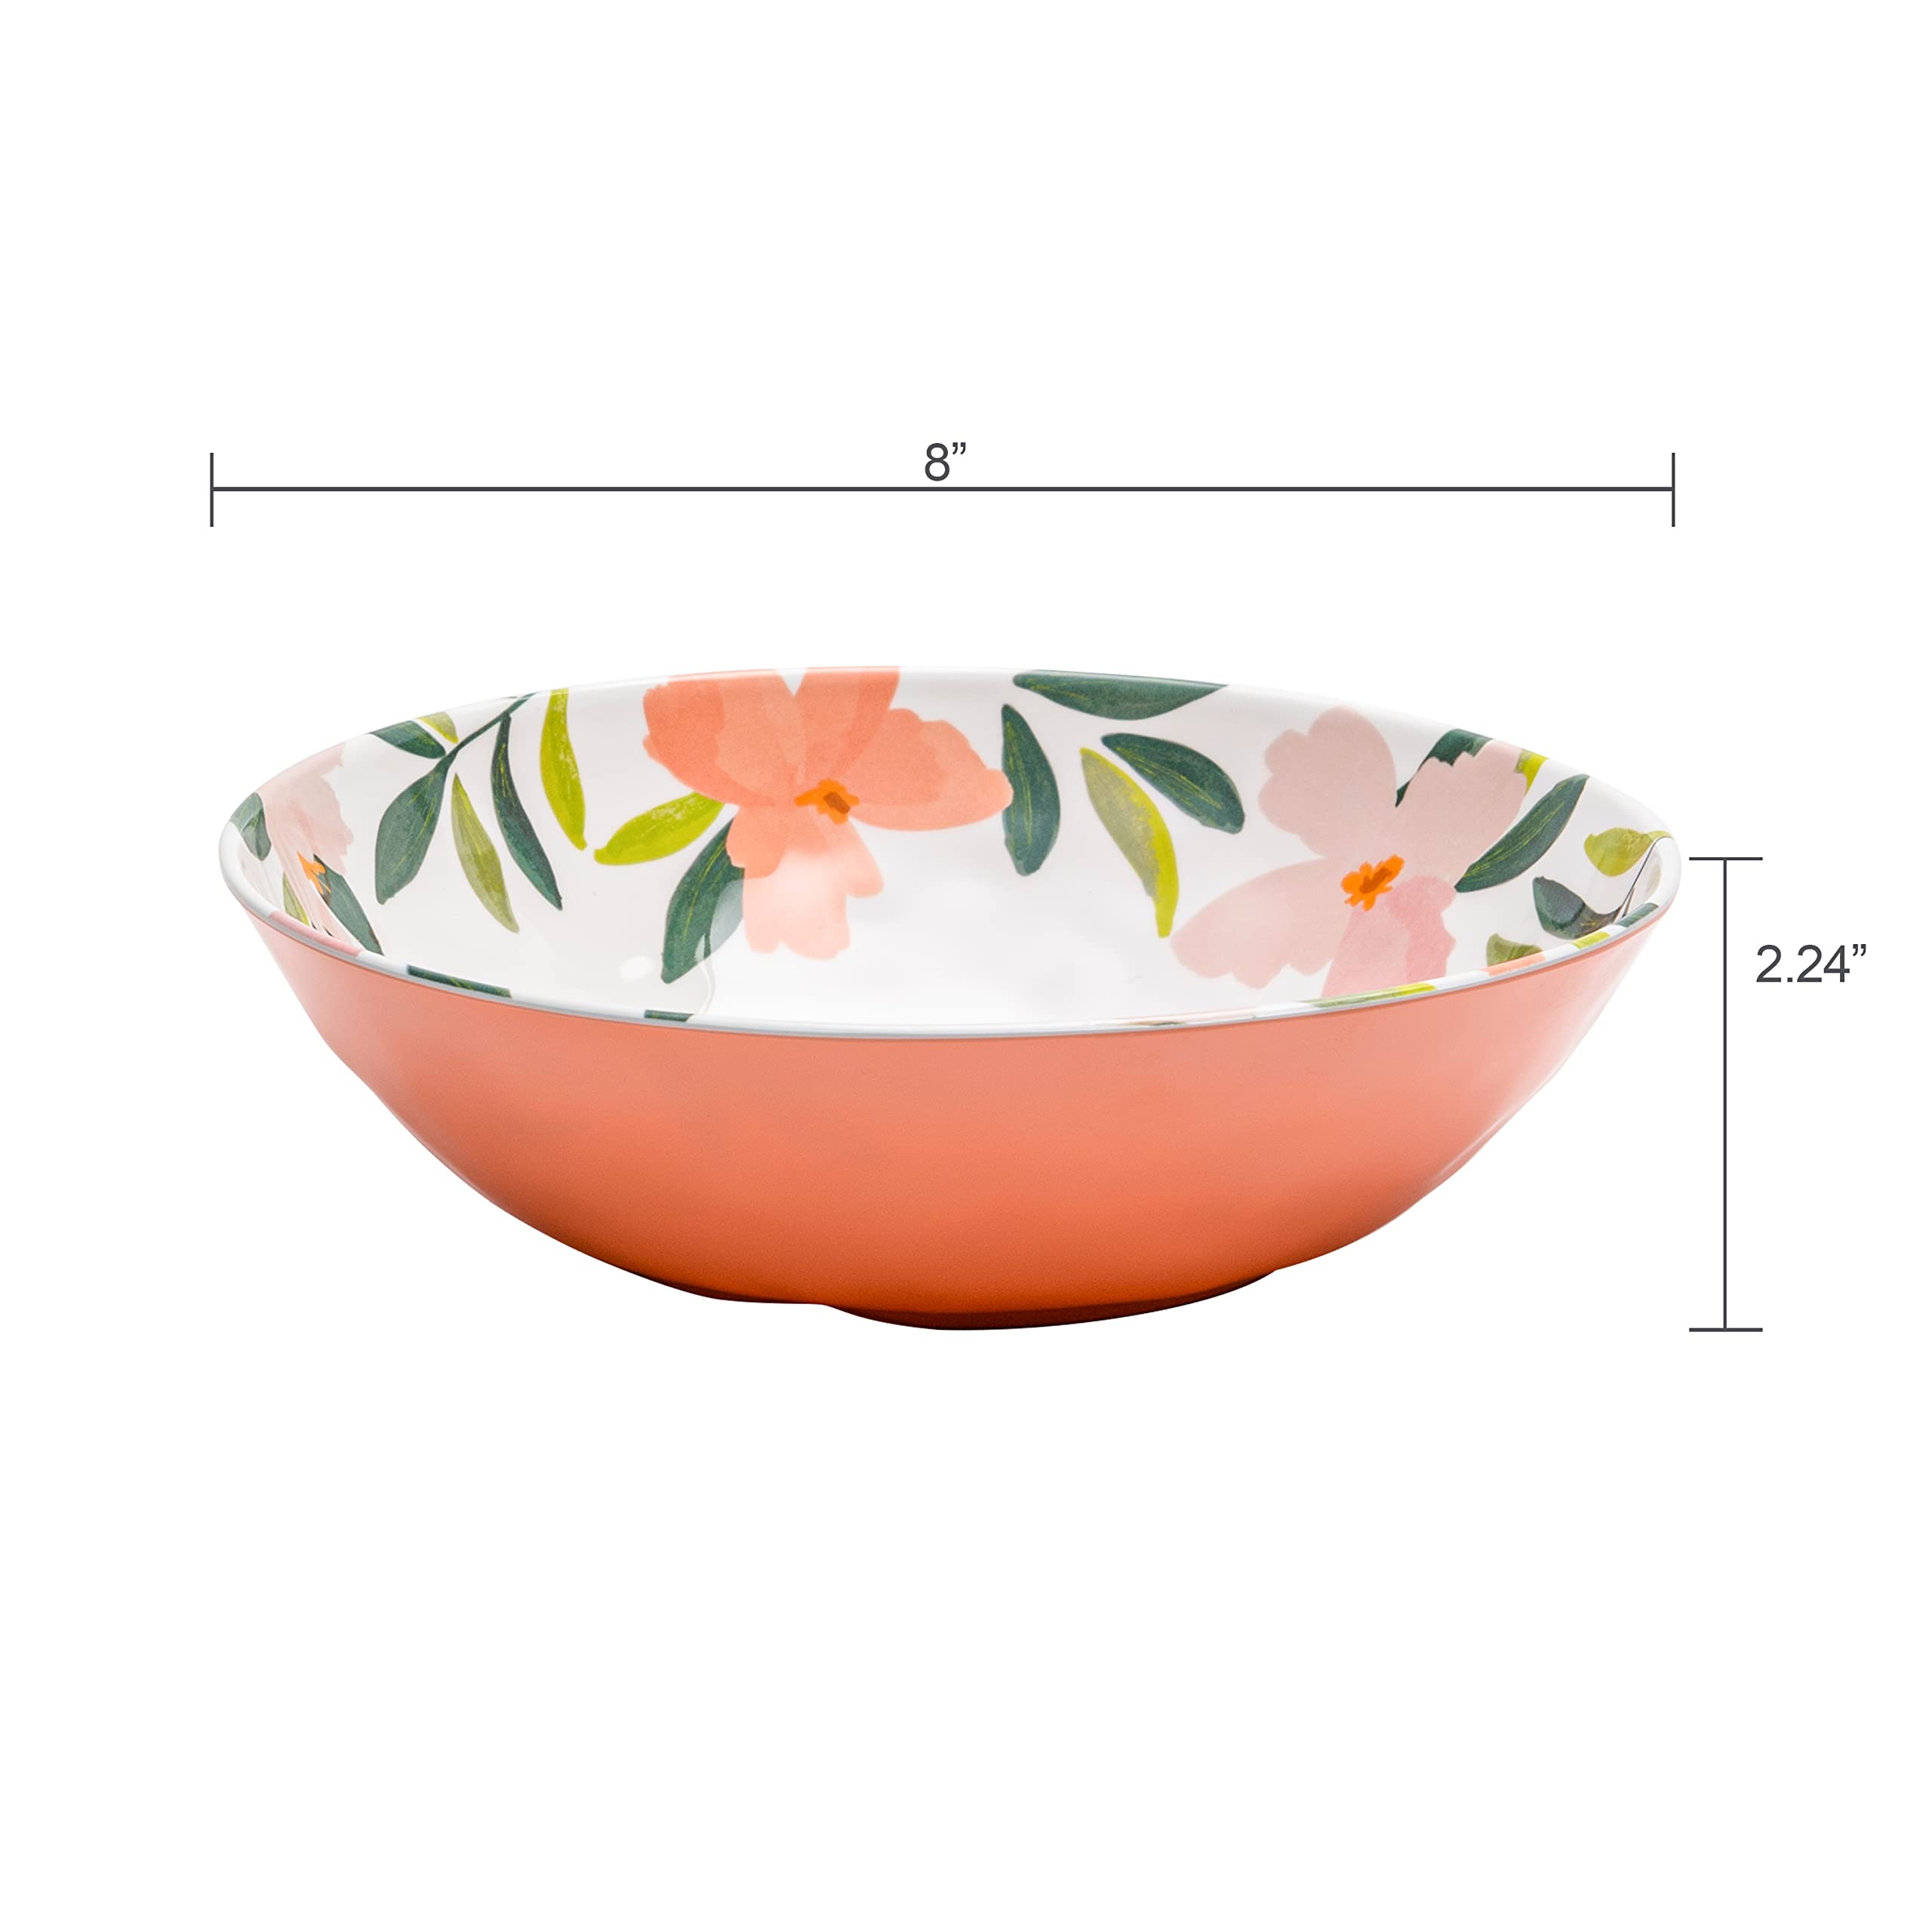 Zak Designs Melamine Dinnerware Set, 12-Piece, Service for 4, Blossom (Apricot)